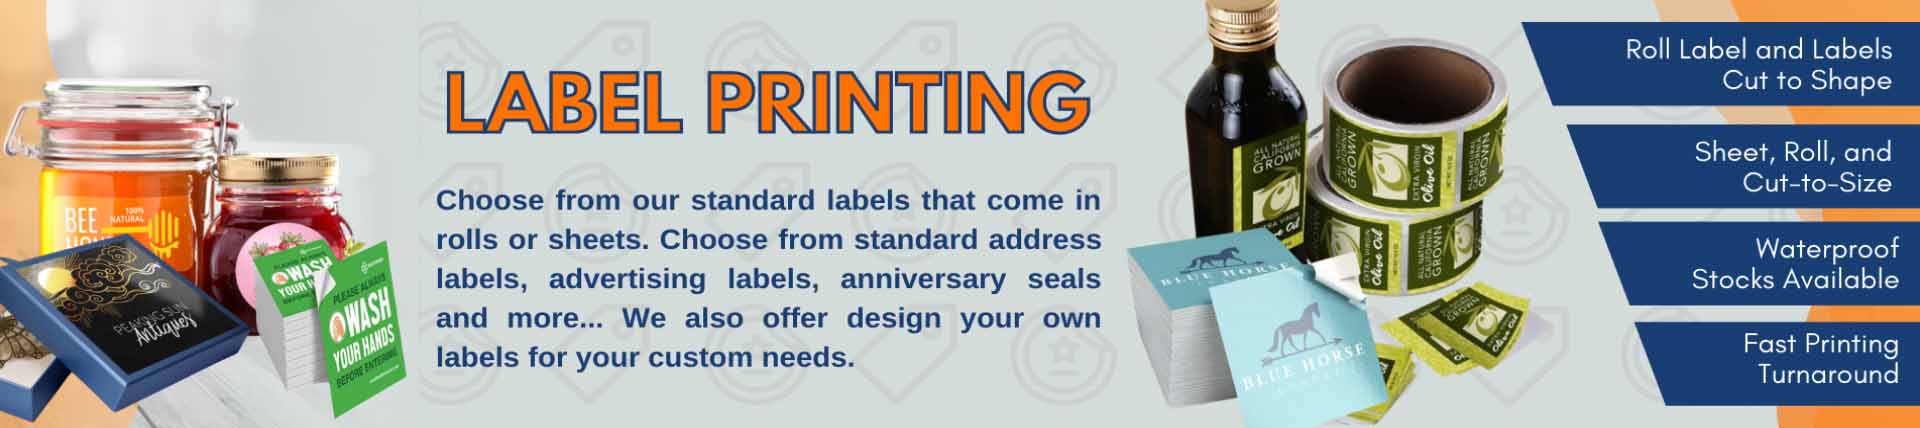 Label_Printing